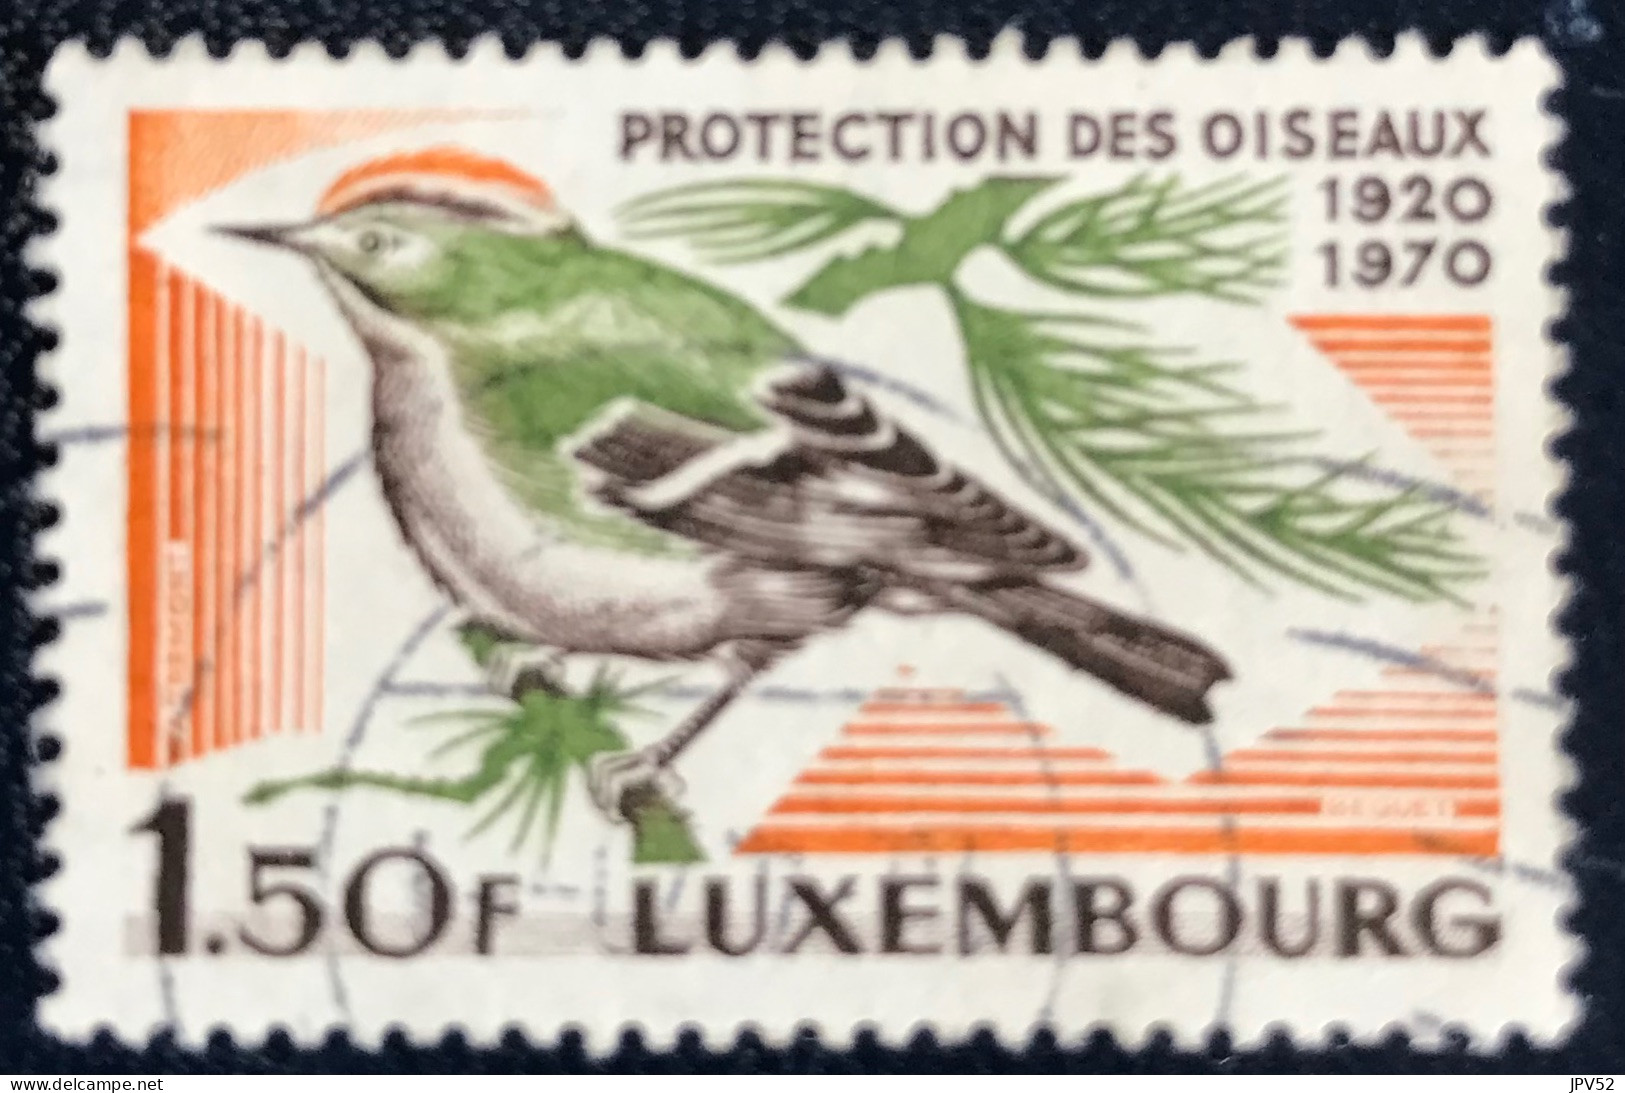 Luxembourg - Luxemburg - C18/32 - 1970 - (°)used - Michel 806 - Vuurgoudhaan - Usati